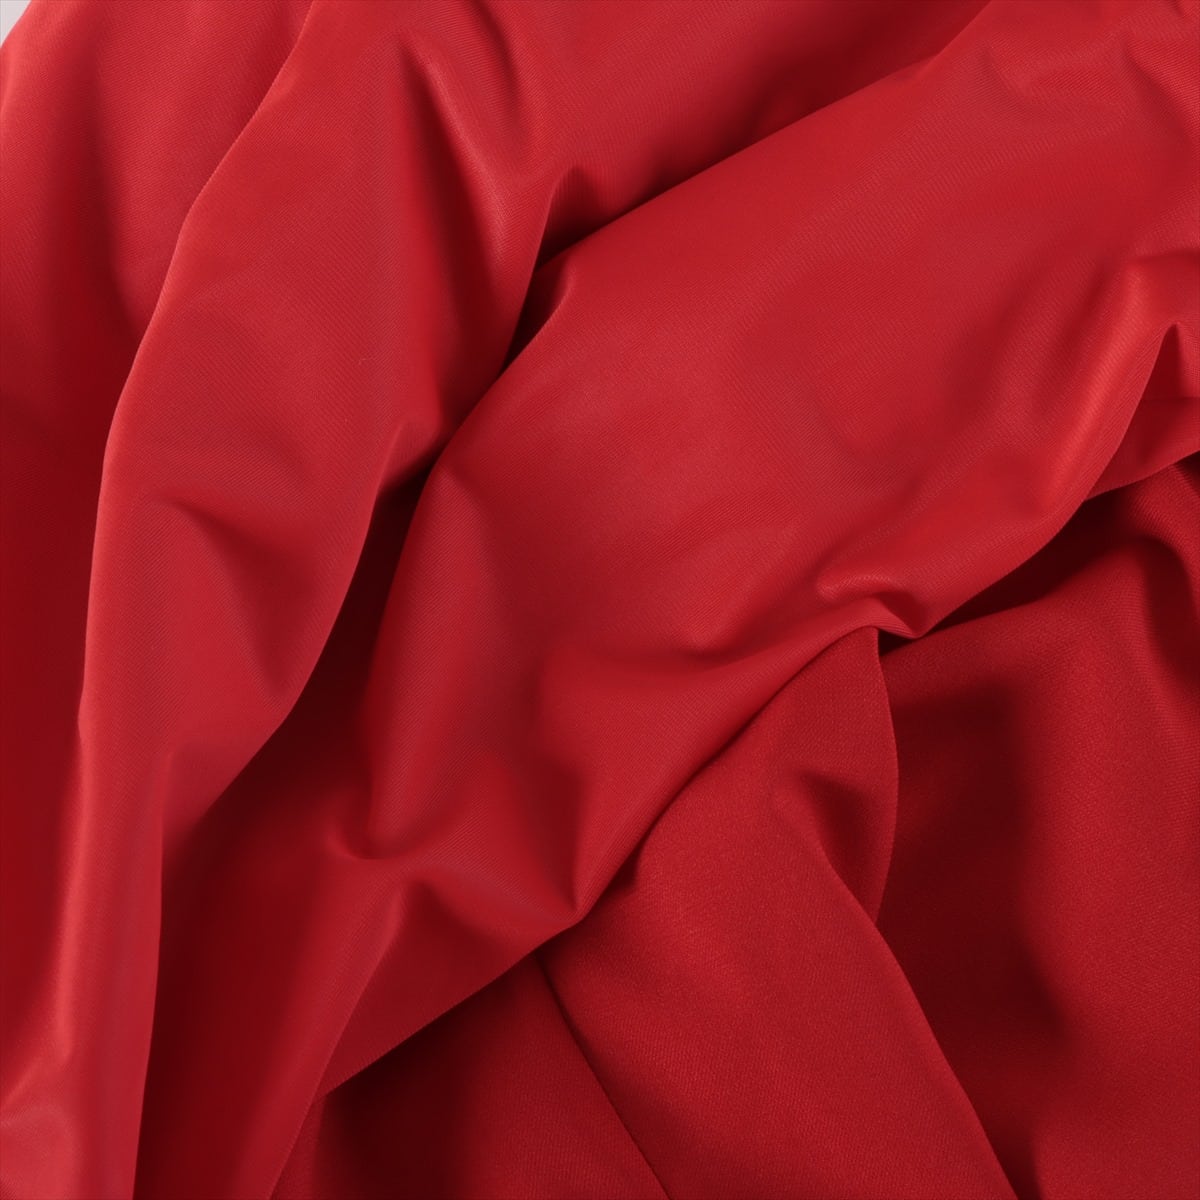 CLANE Polyester Slacks Ladies' Red